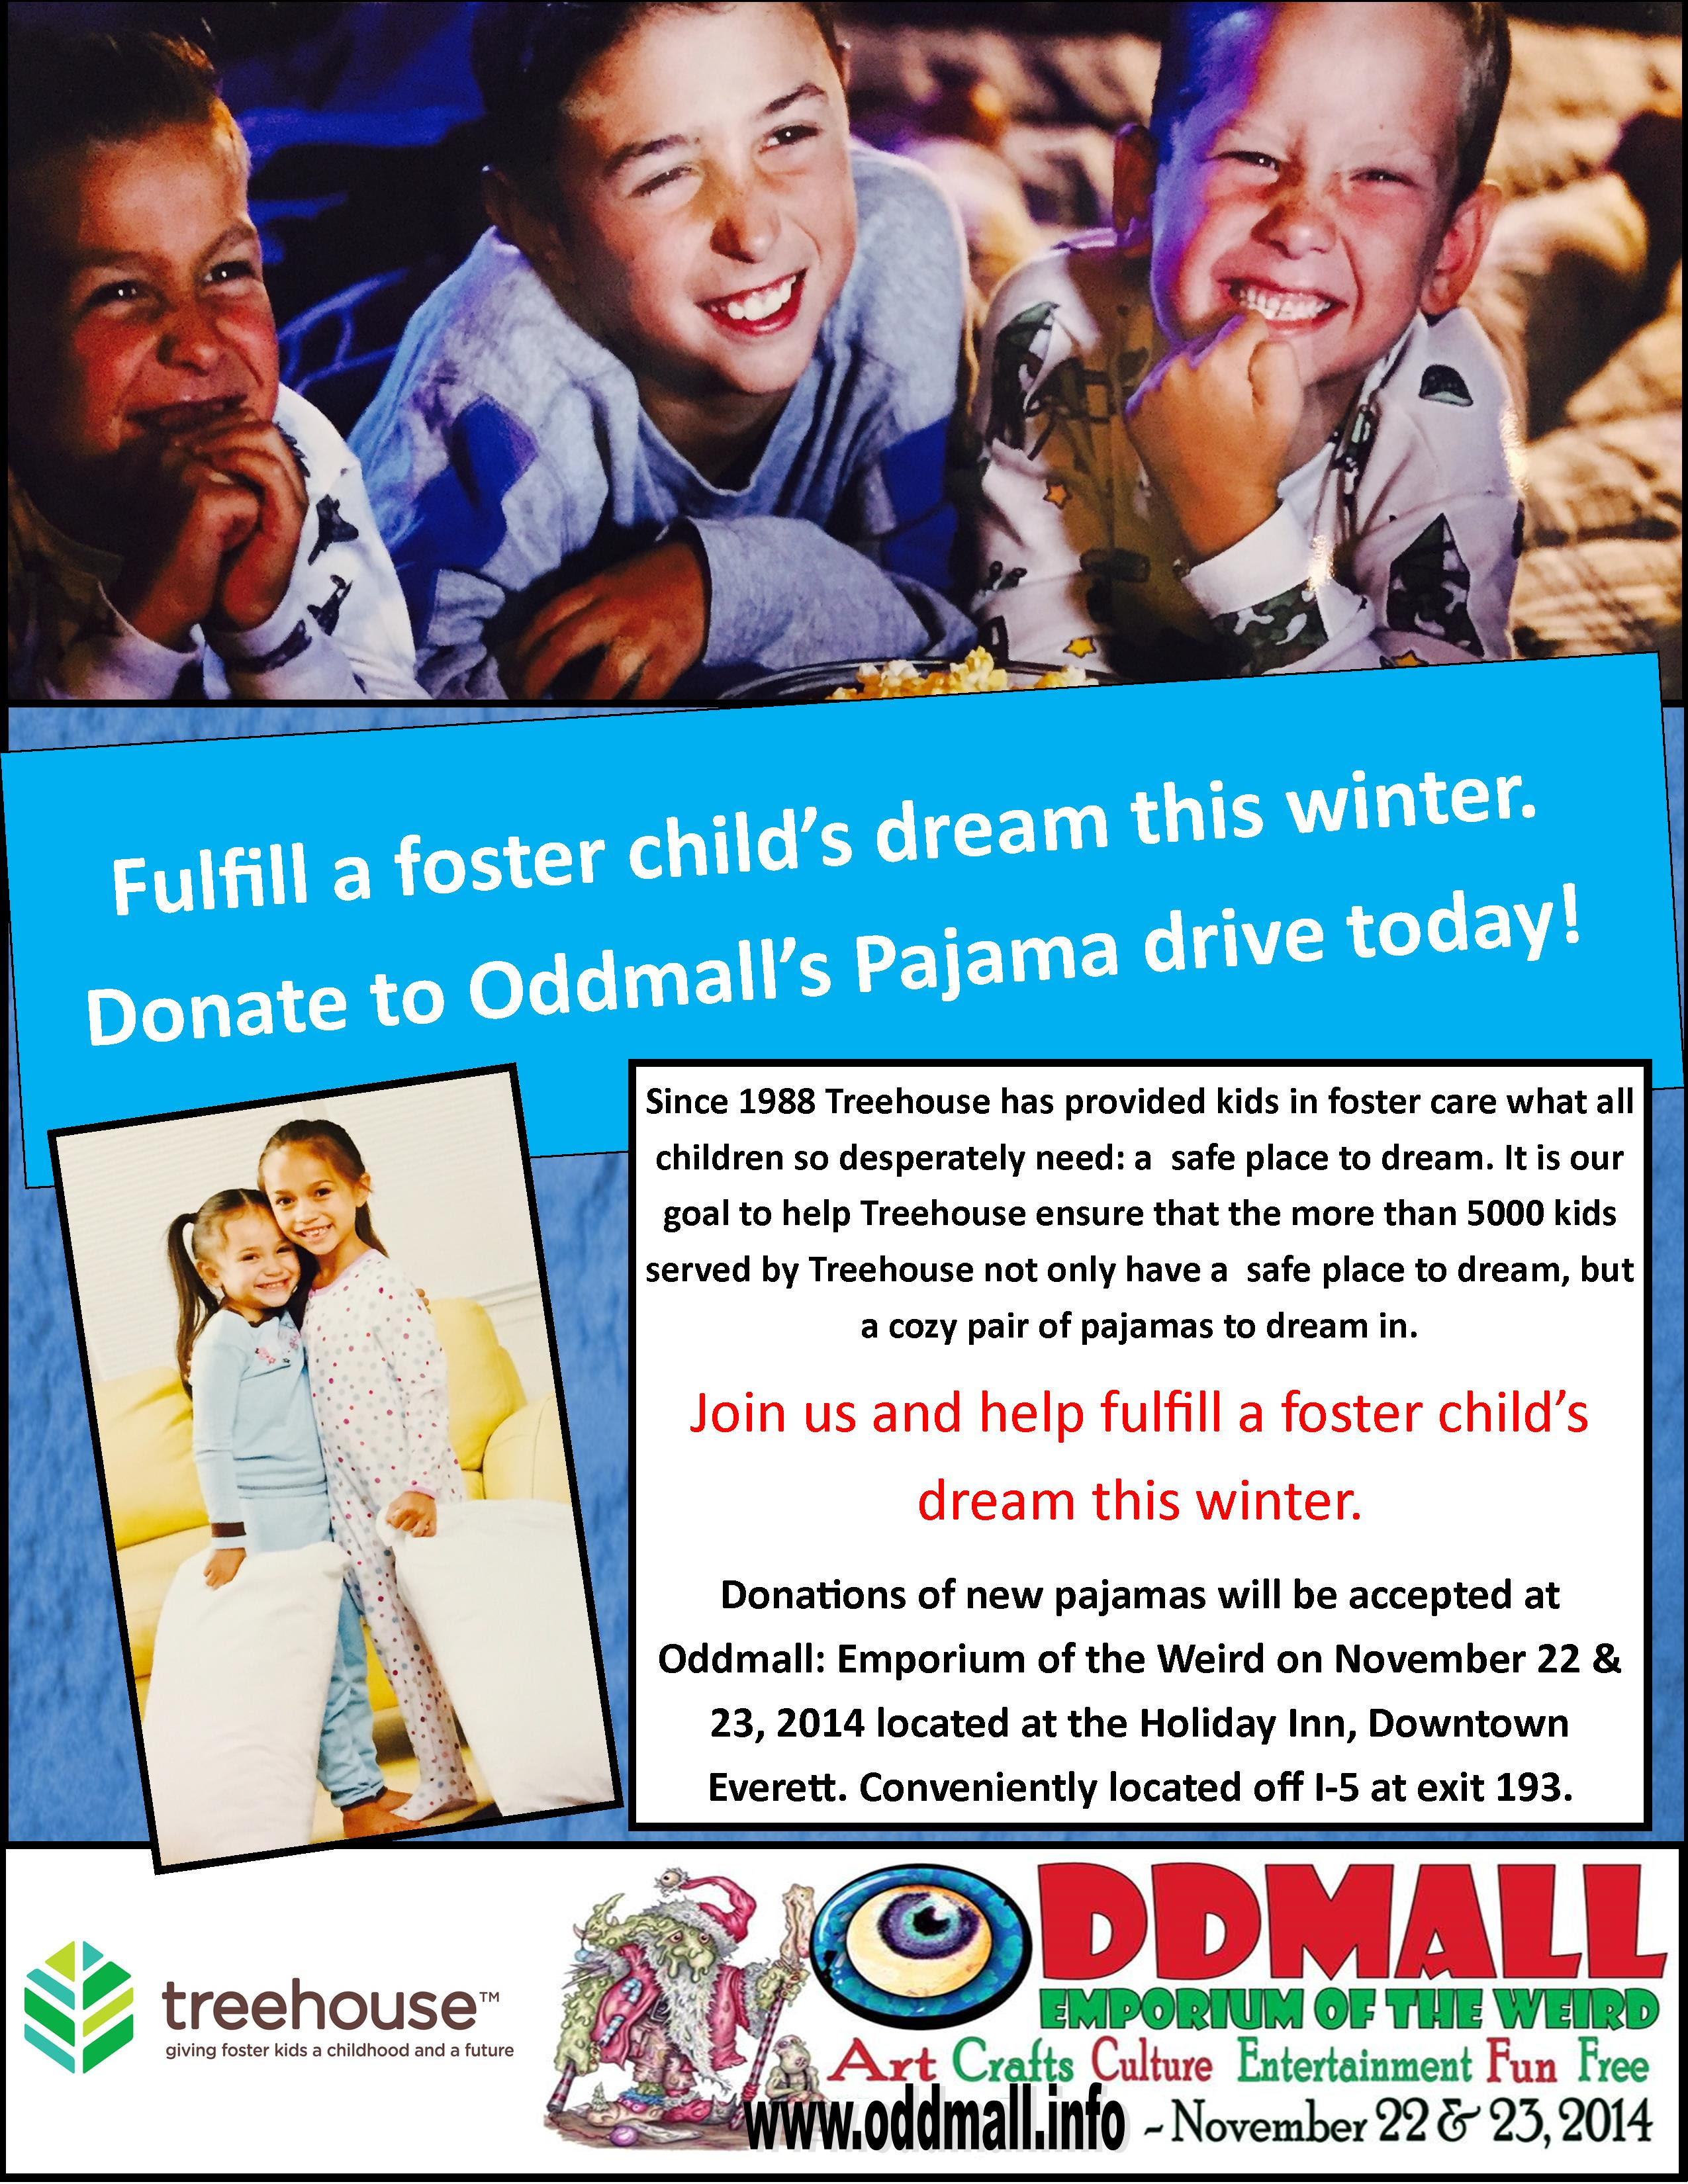 Oddmall Pajama Drive benefiting Treehouse Saturday and Sunday | November 22 -